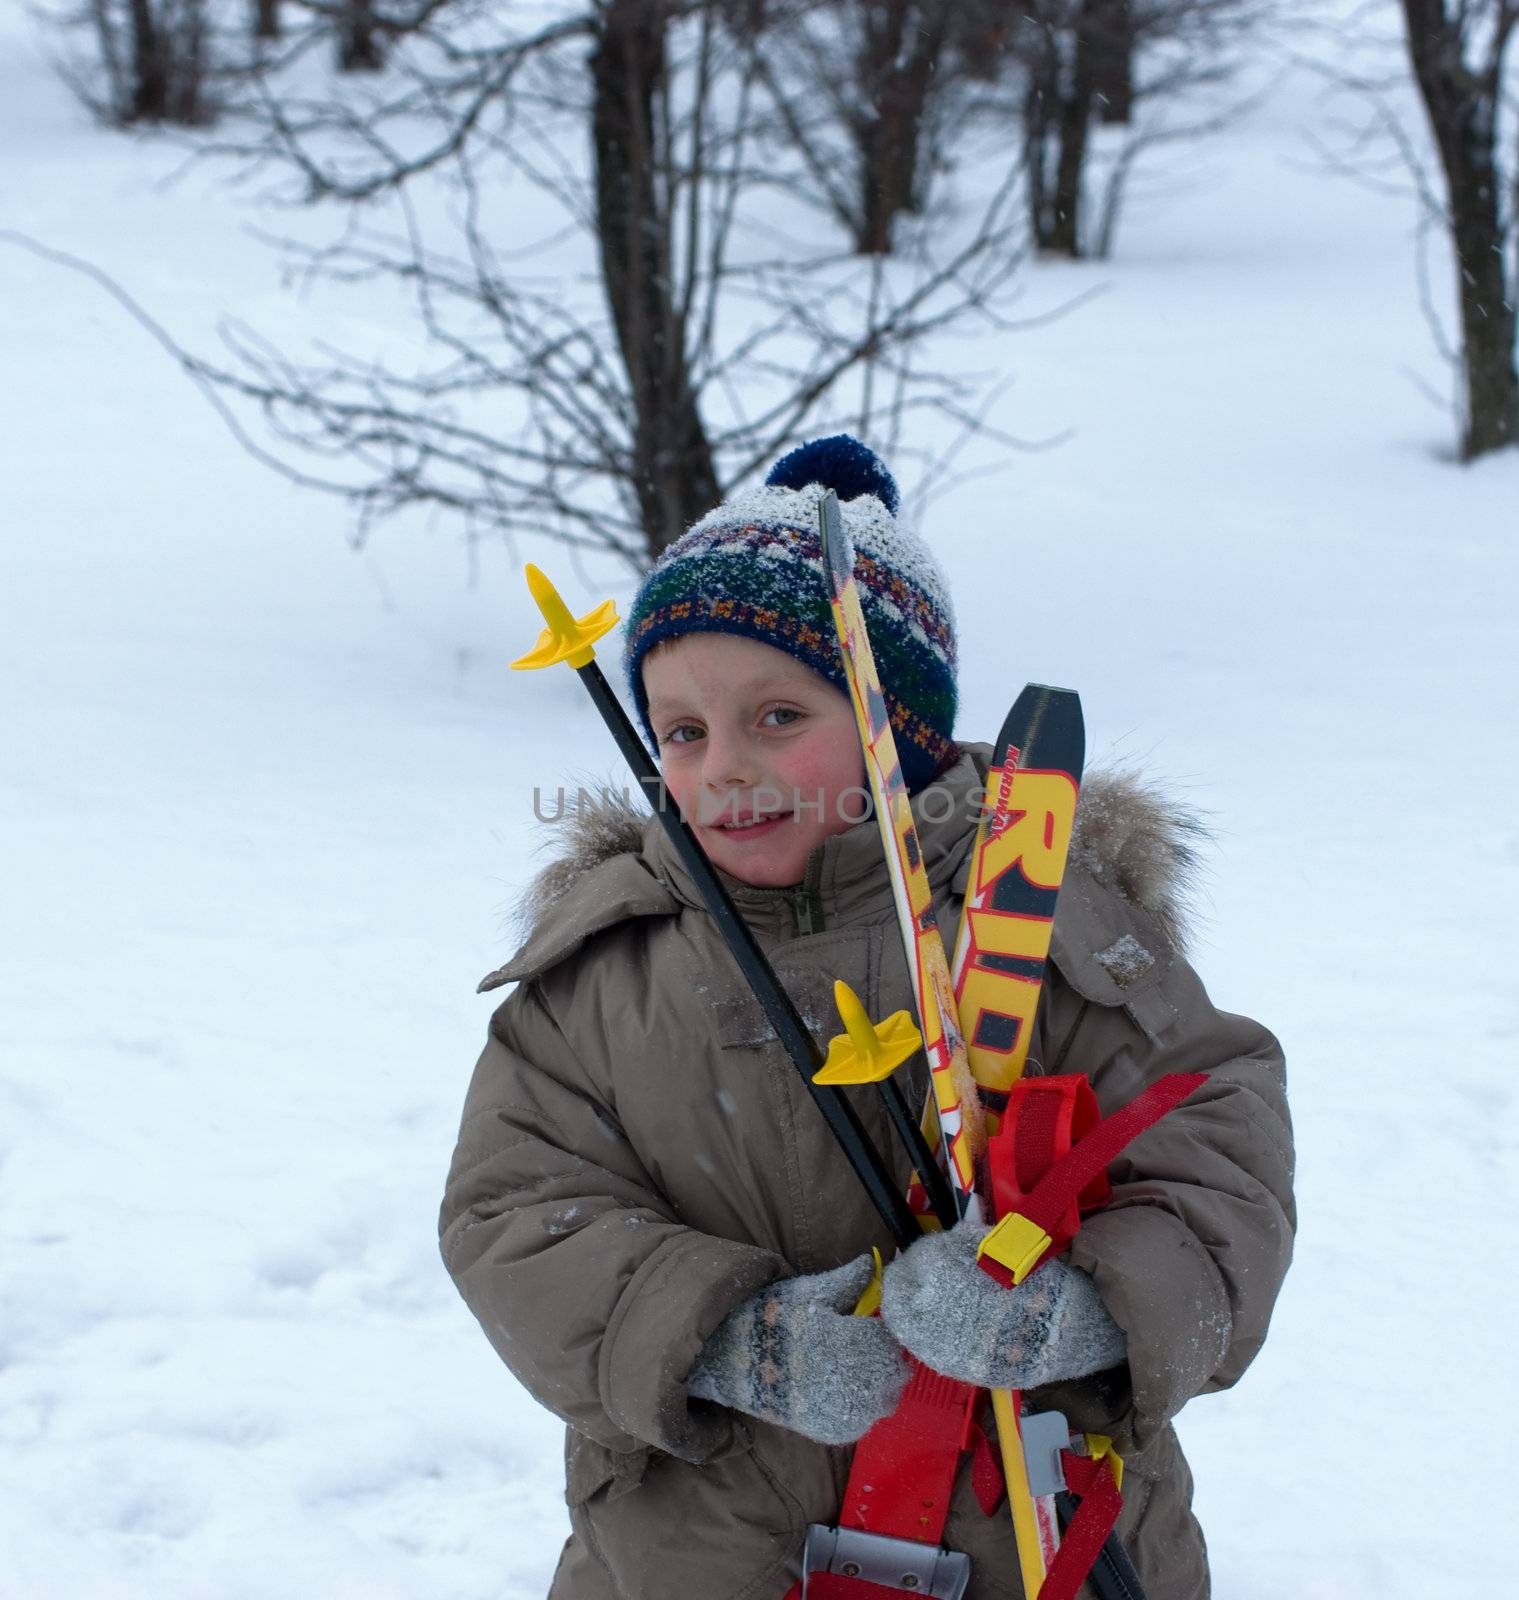 The boy with skis  by kromeshnik